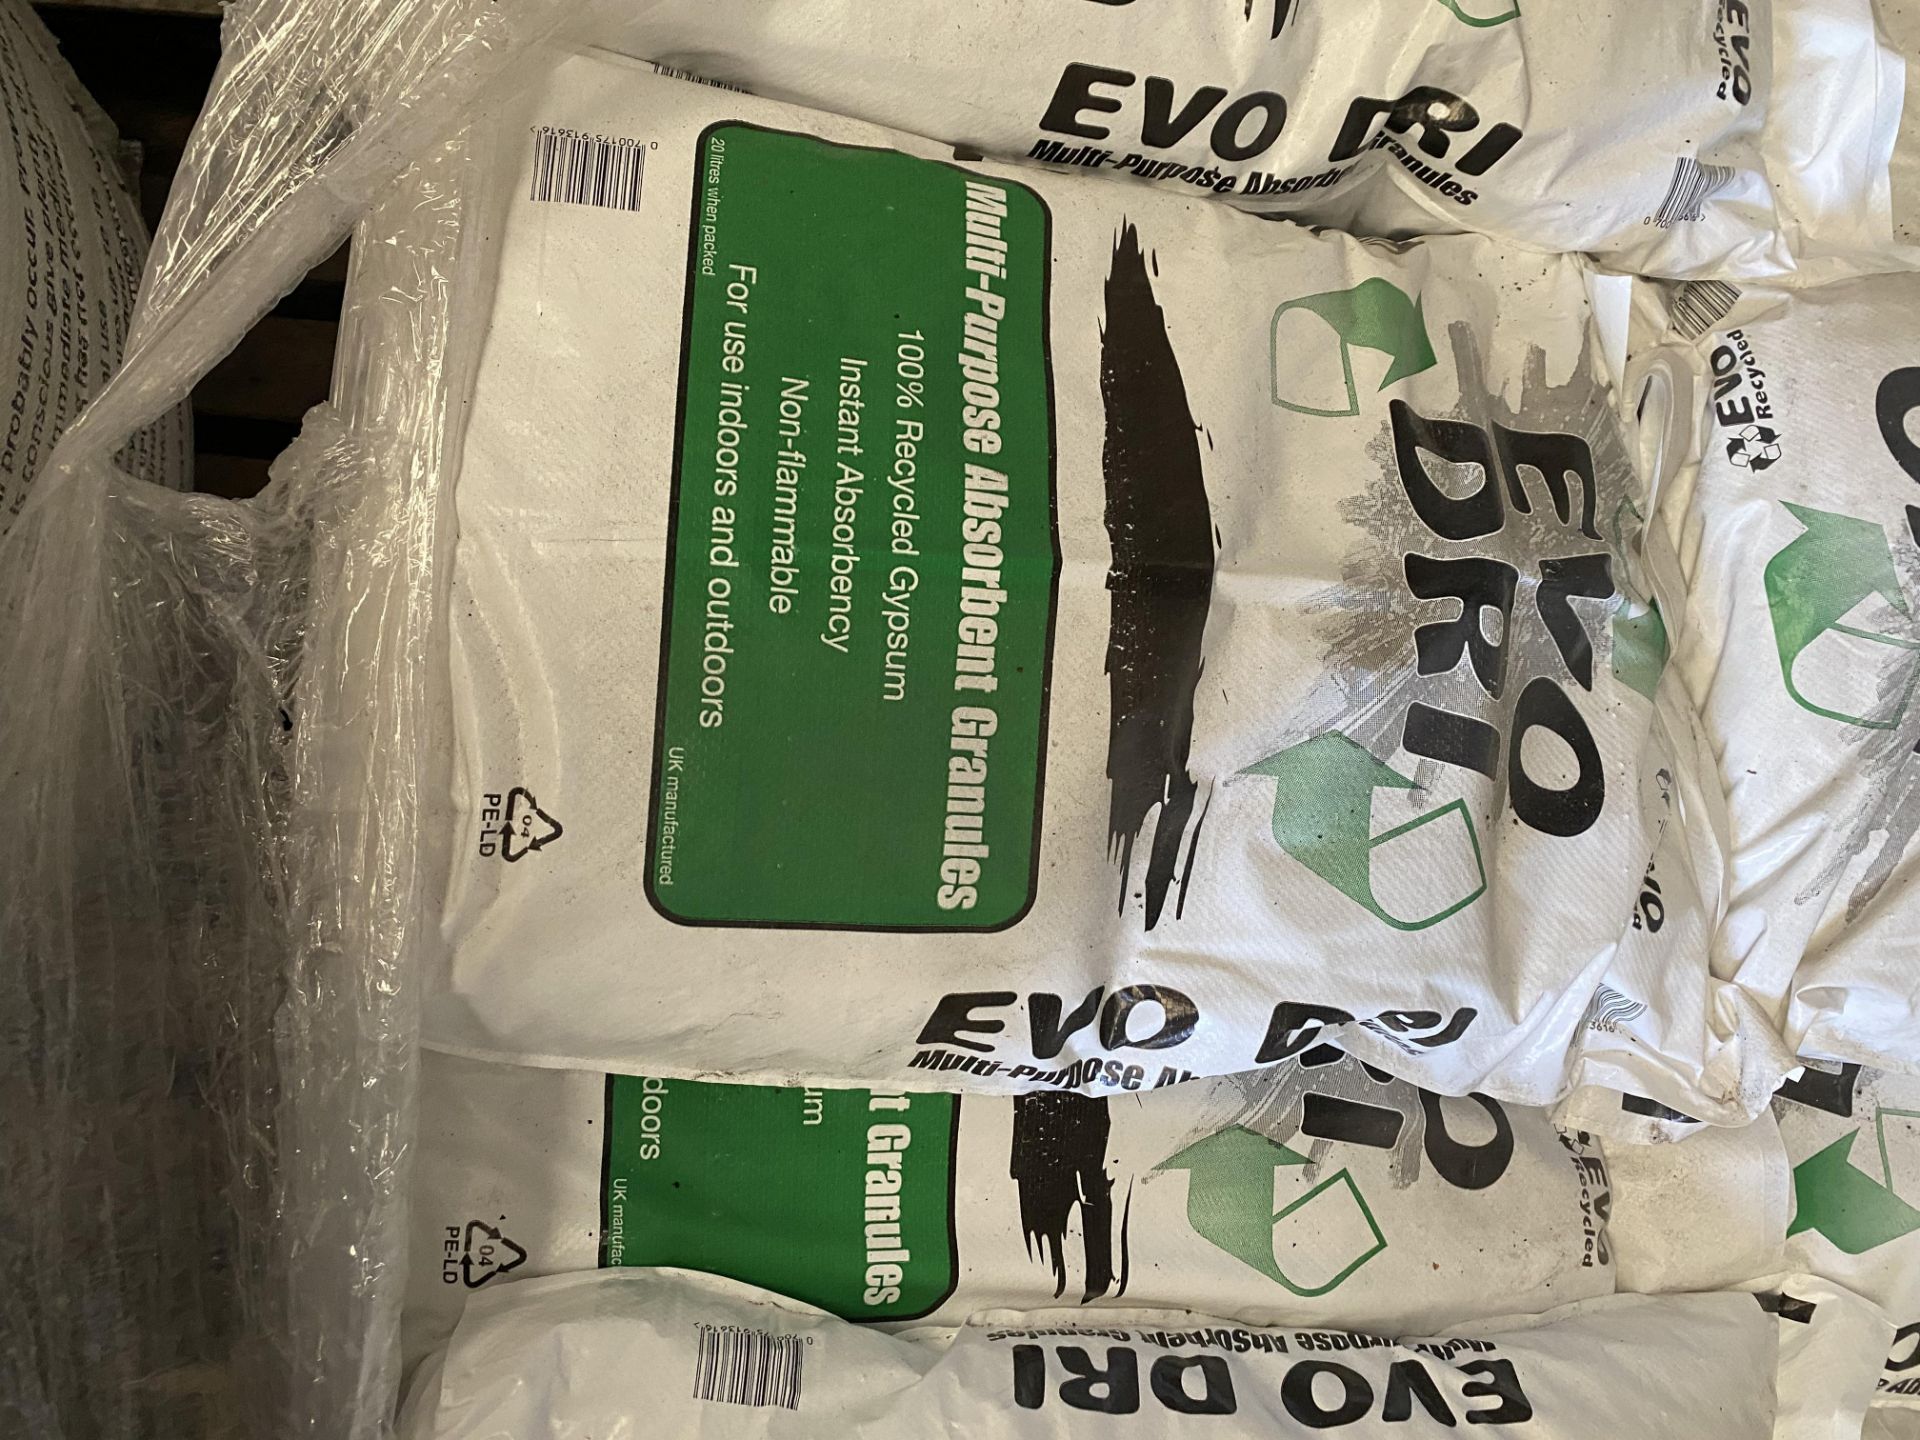 Pallet of Evo dry multi purpose absorbent granules - Image 2 of 2